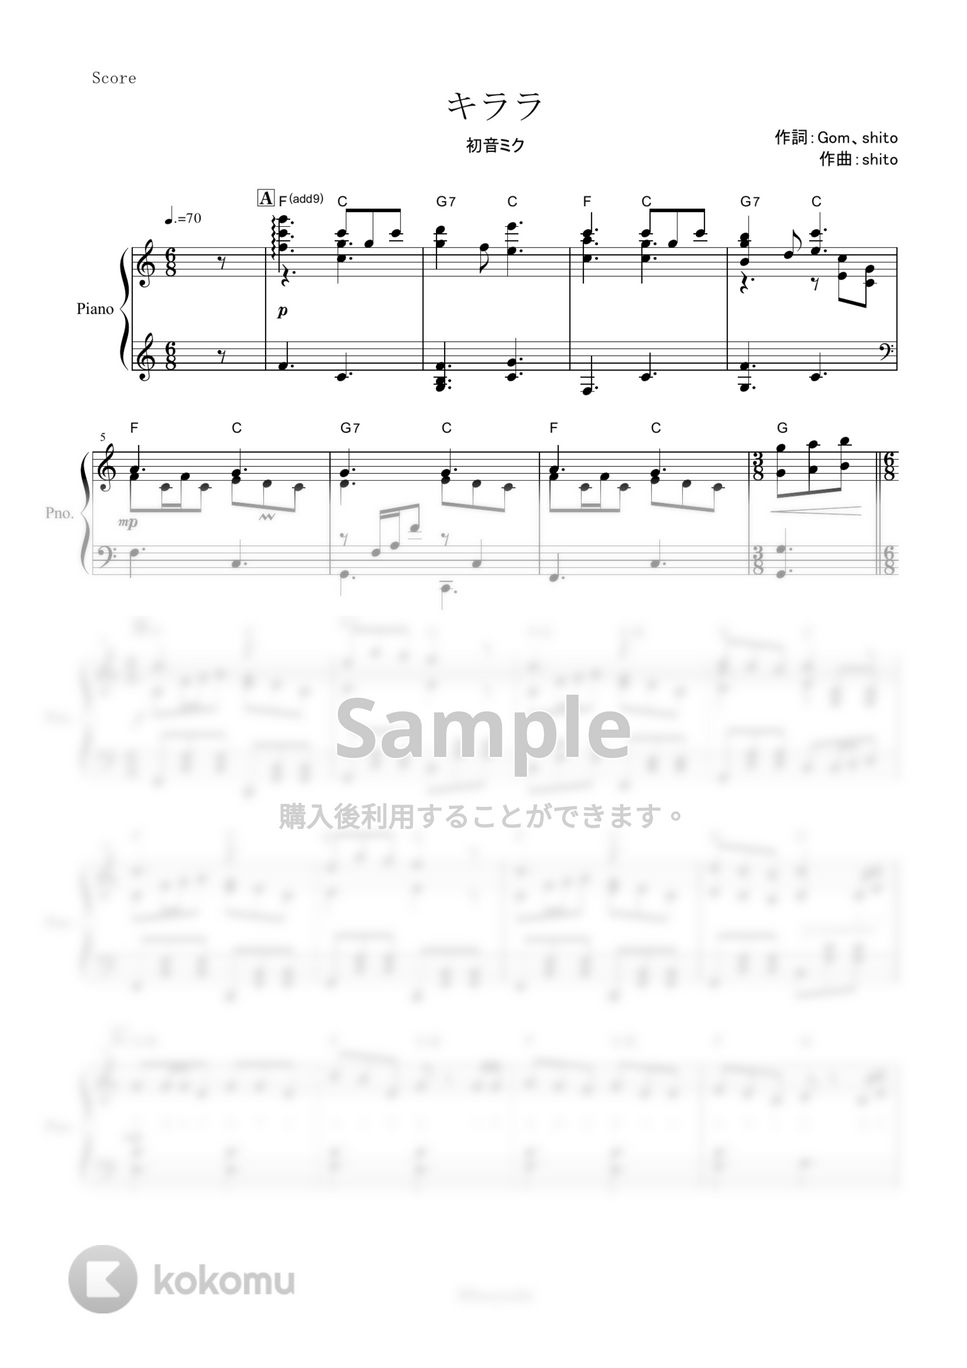 HoneyWorks - キララ (ピアノ楽譜/全６ページ) by yoshi